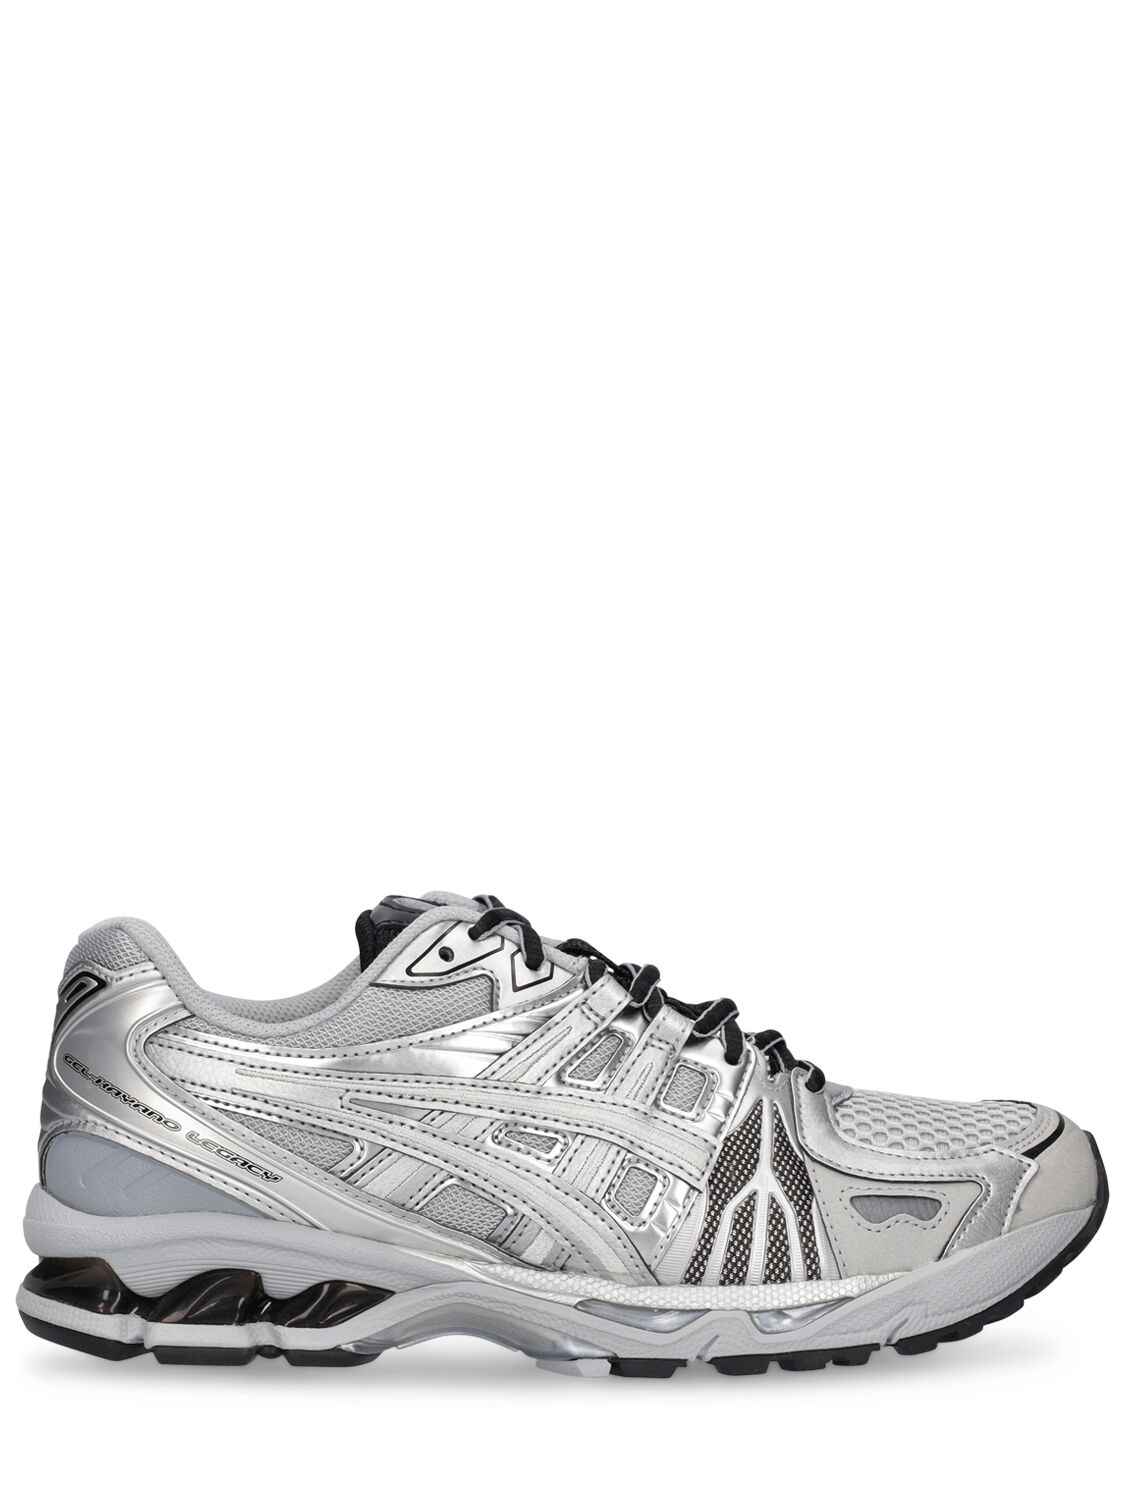 Gel kayano Legacy Sneakers In Pure Silver